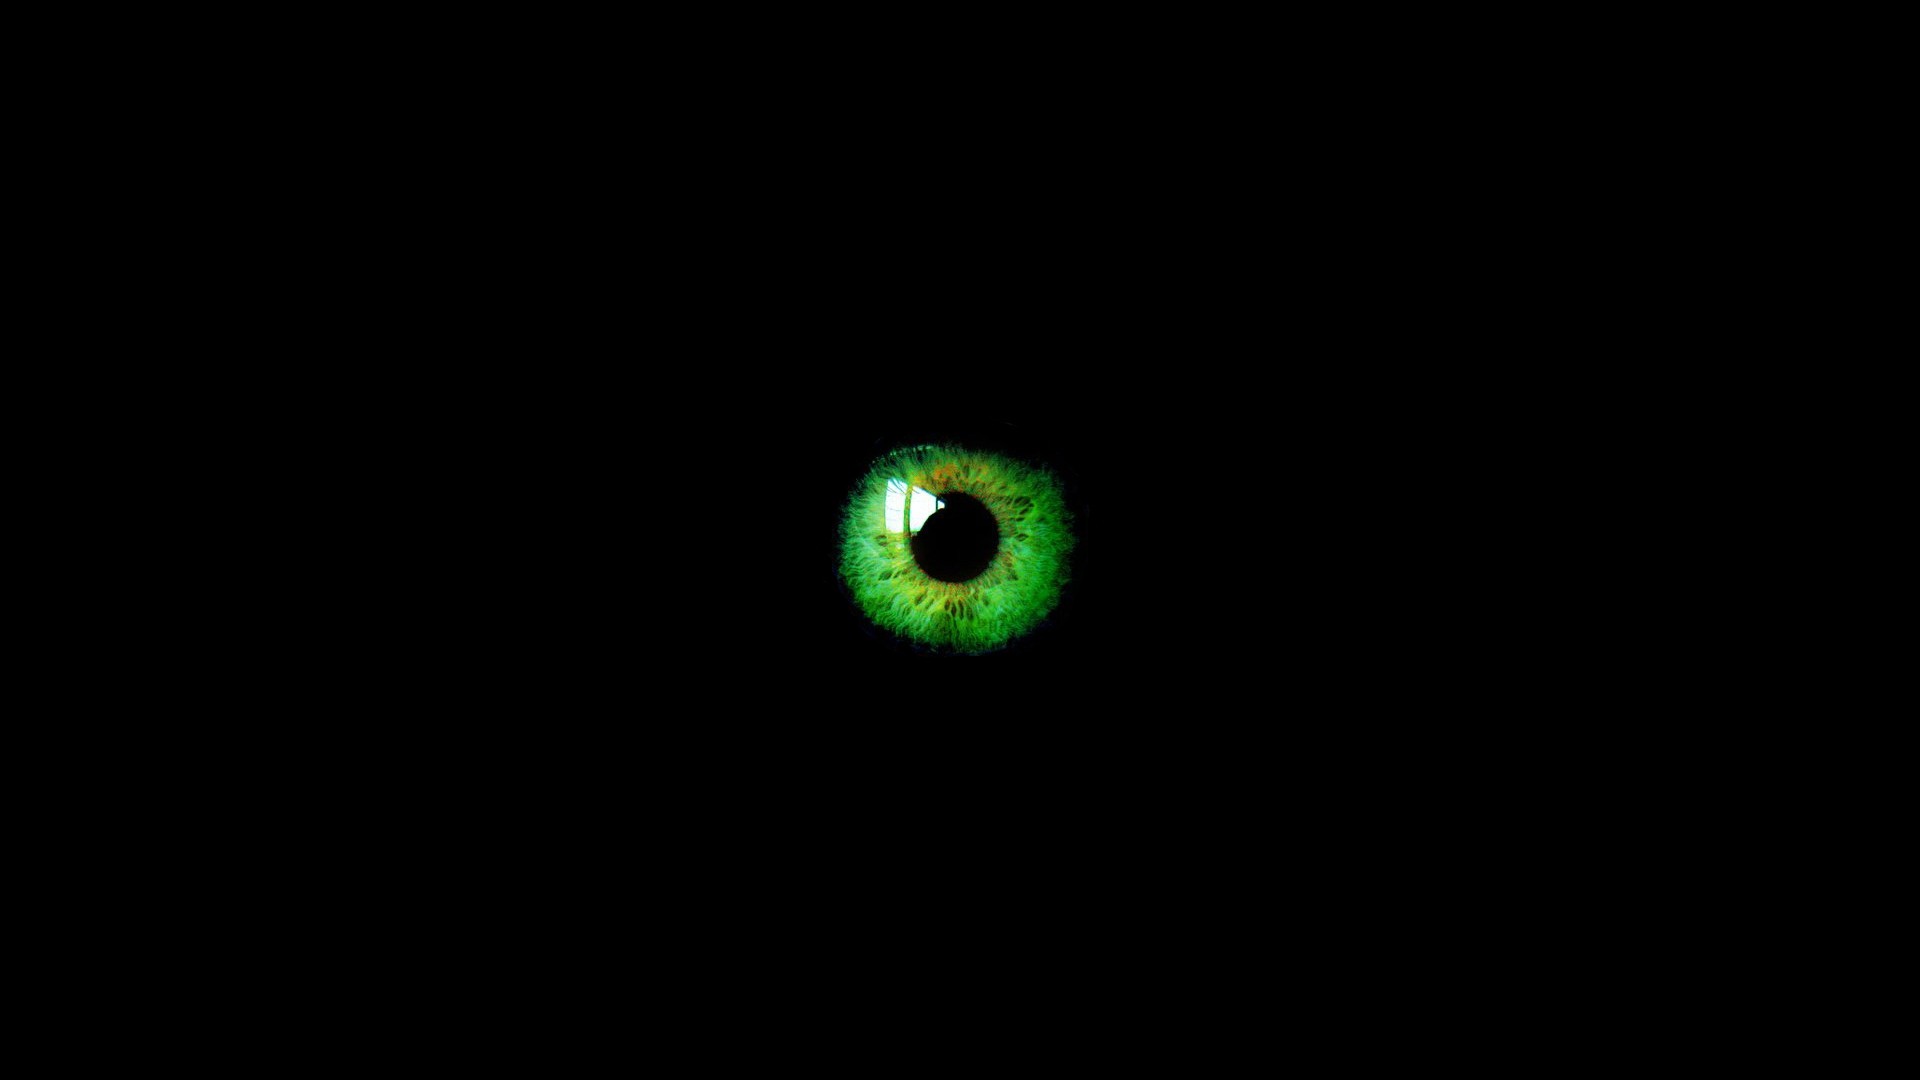 Green Eye on Black Background   Wallpaper 32820